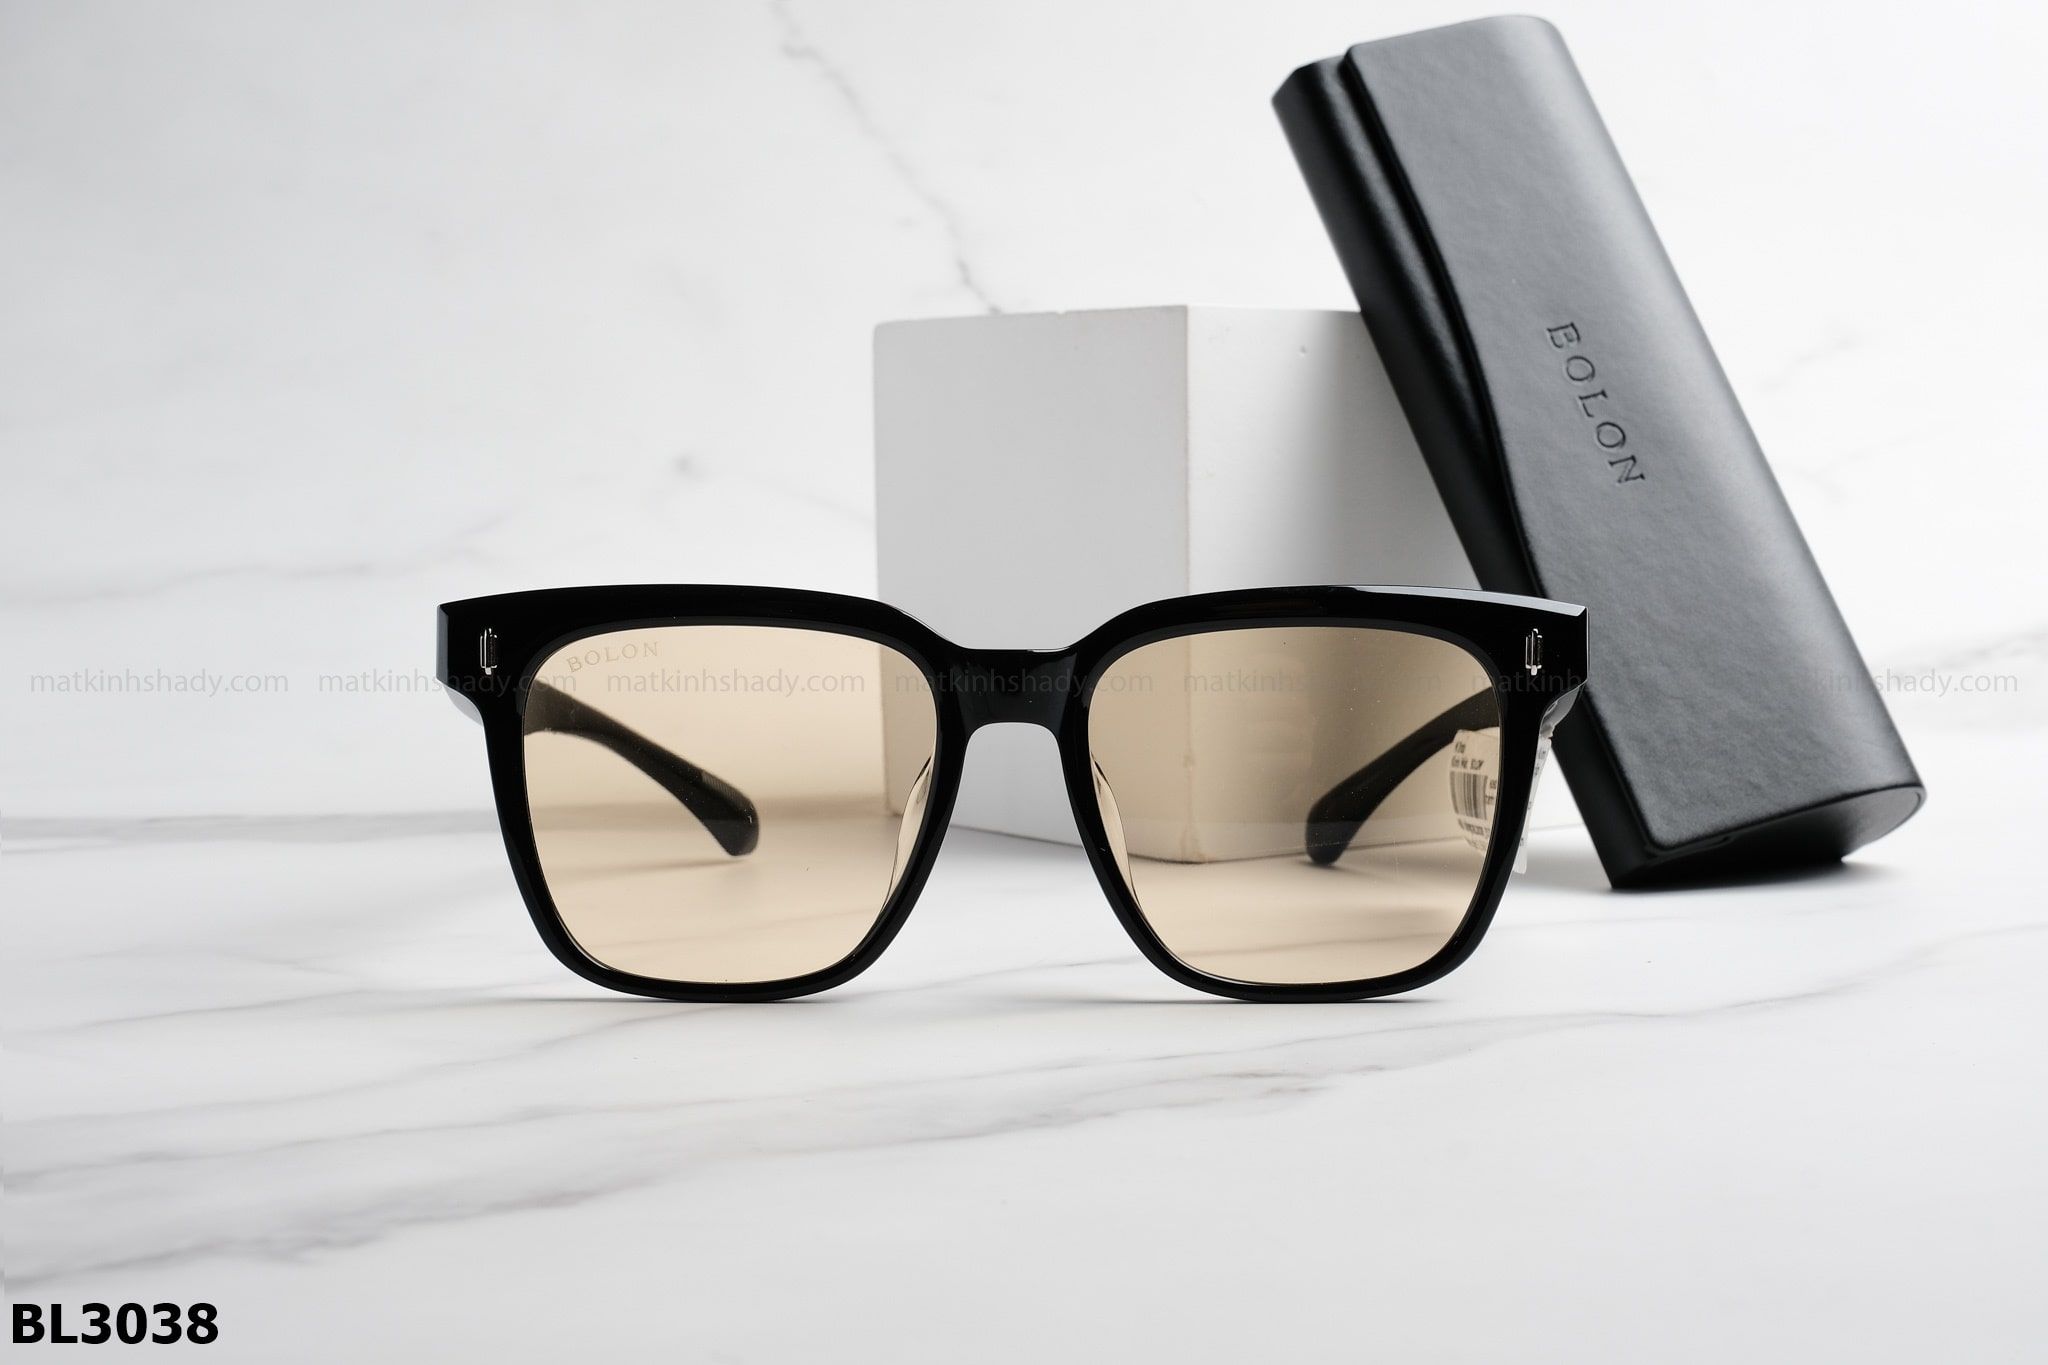  Bolon Eyewear - Sunglasses - BL3038 